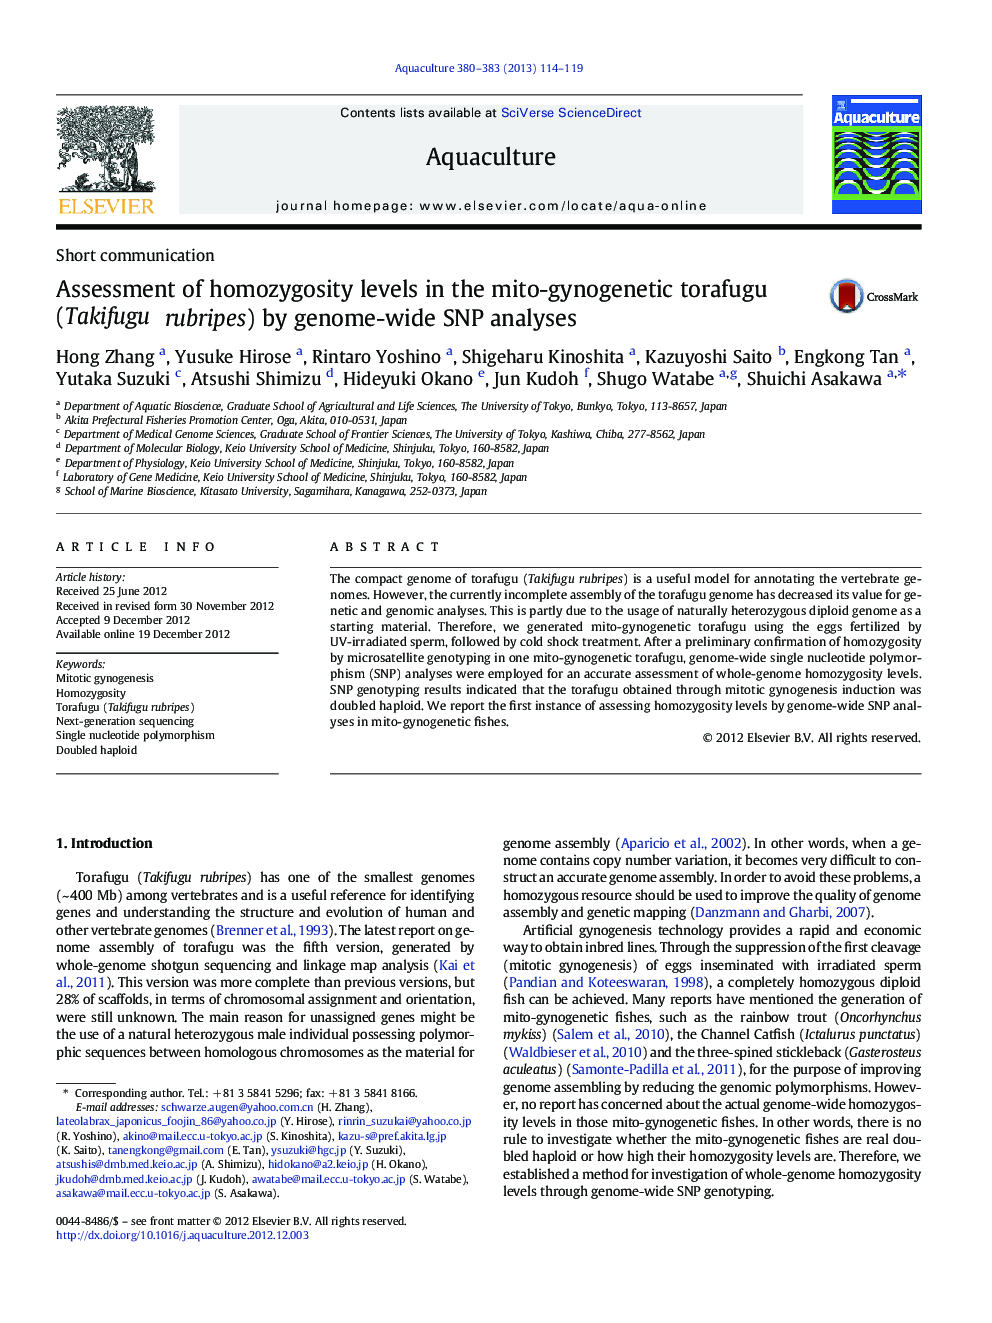 Assessment of homozygosity levels in the mito-gynogenetic torafugu (Takifugu rubripes) by genome-wide SNP analyses